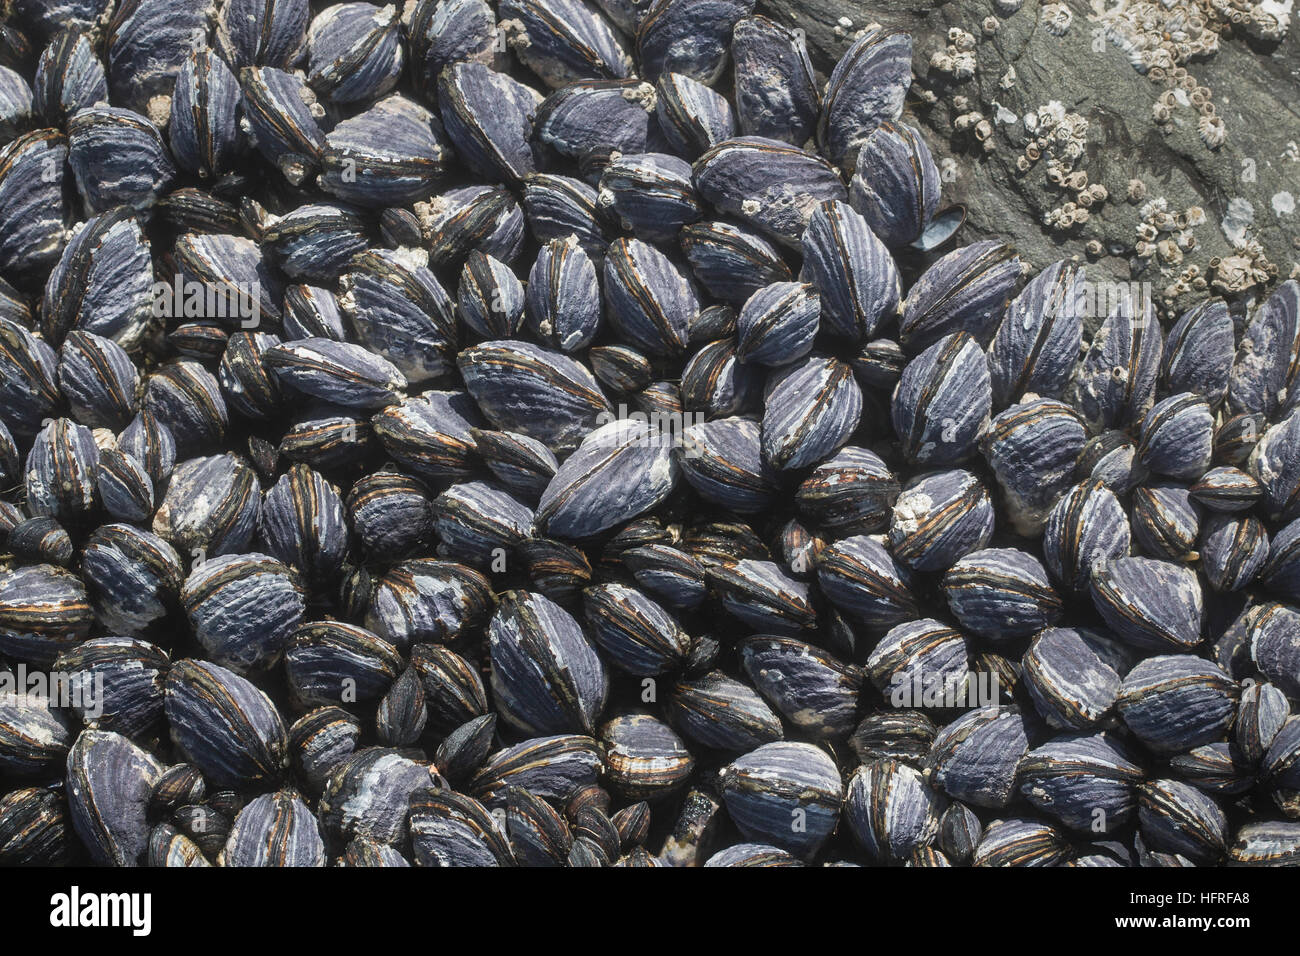 California mussels (Mytilus californianus) adhering to rocks. Stock Photo